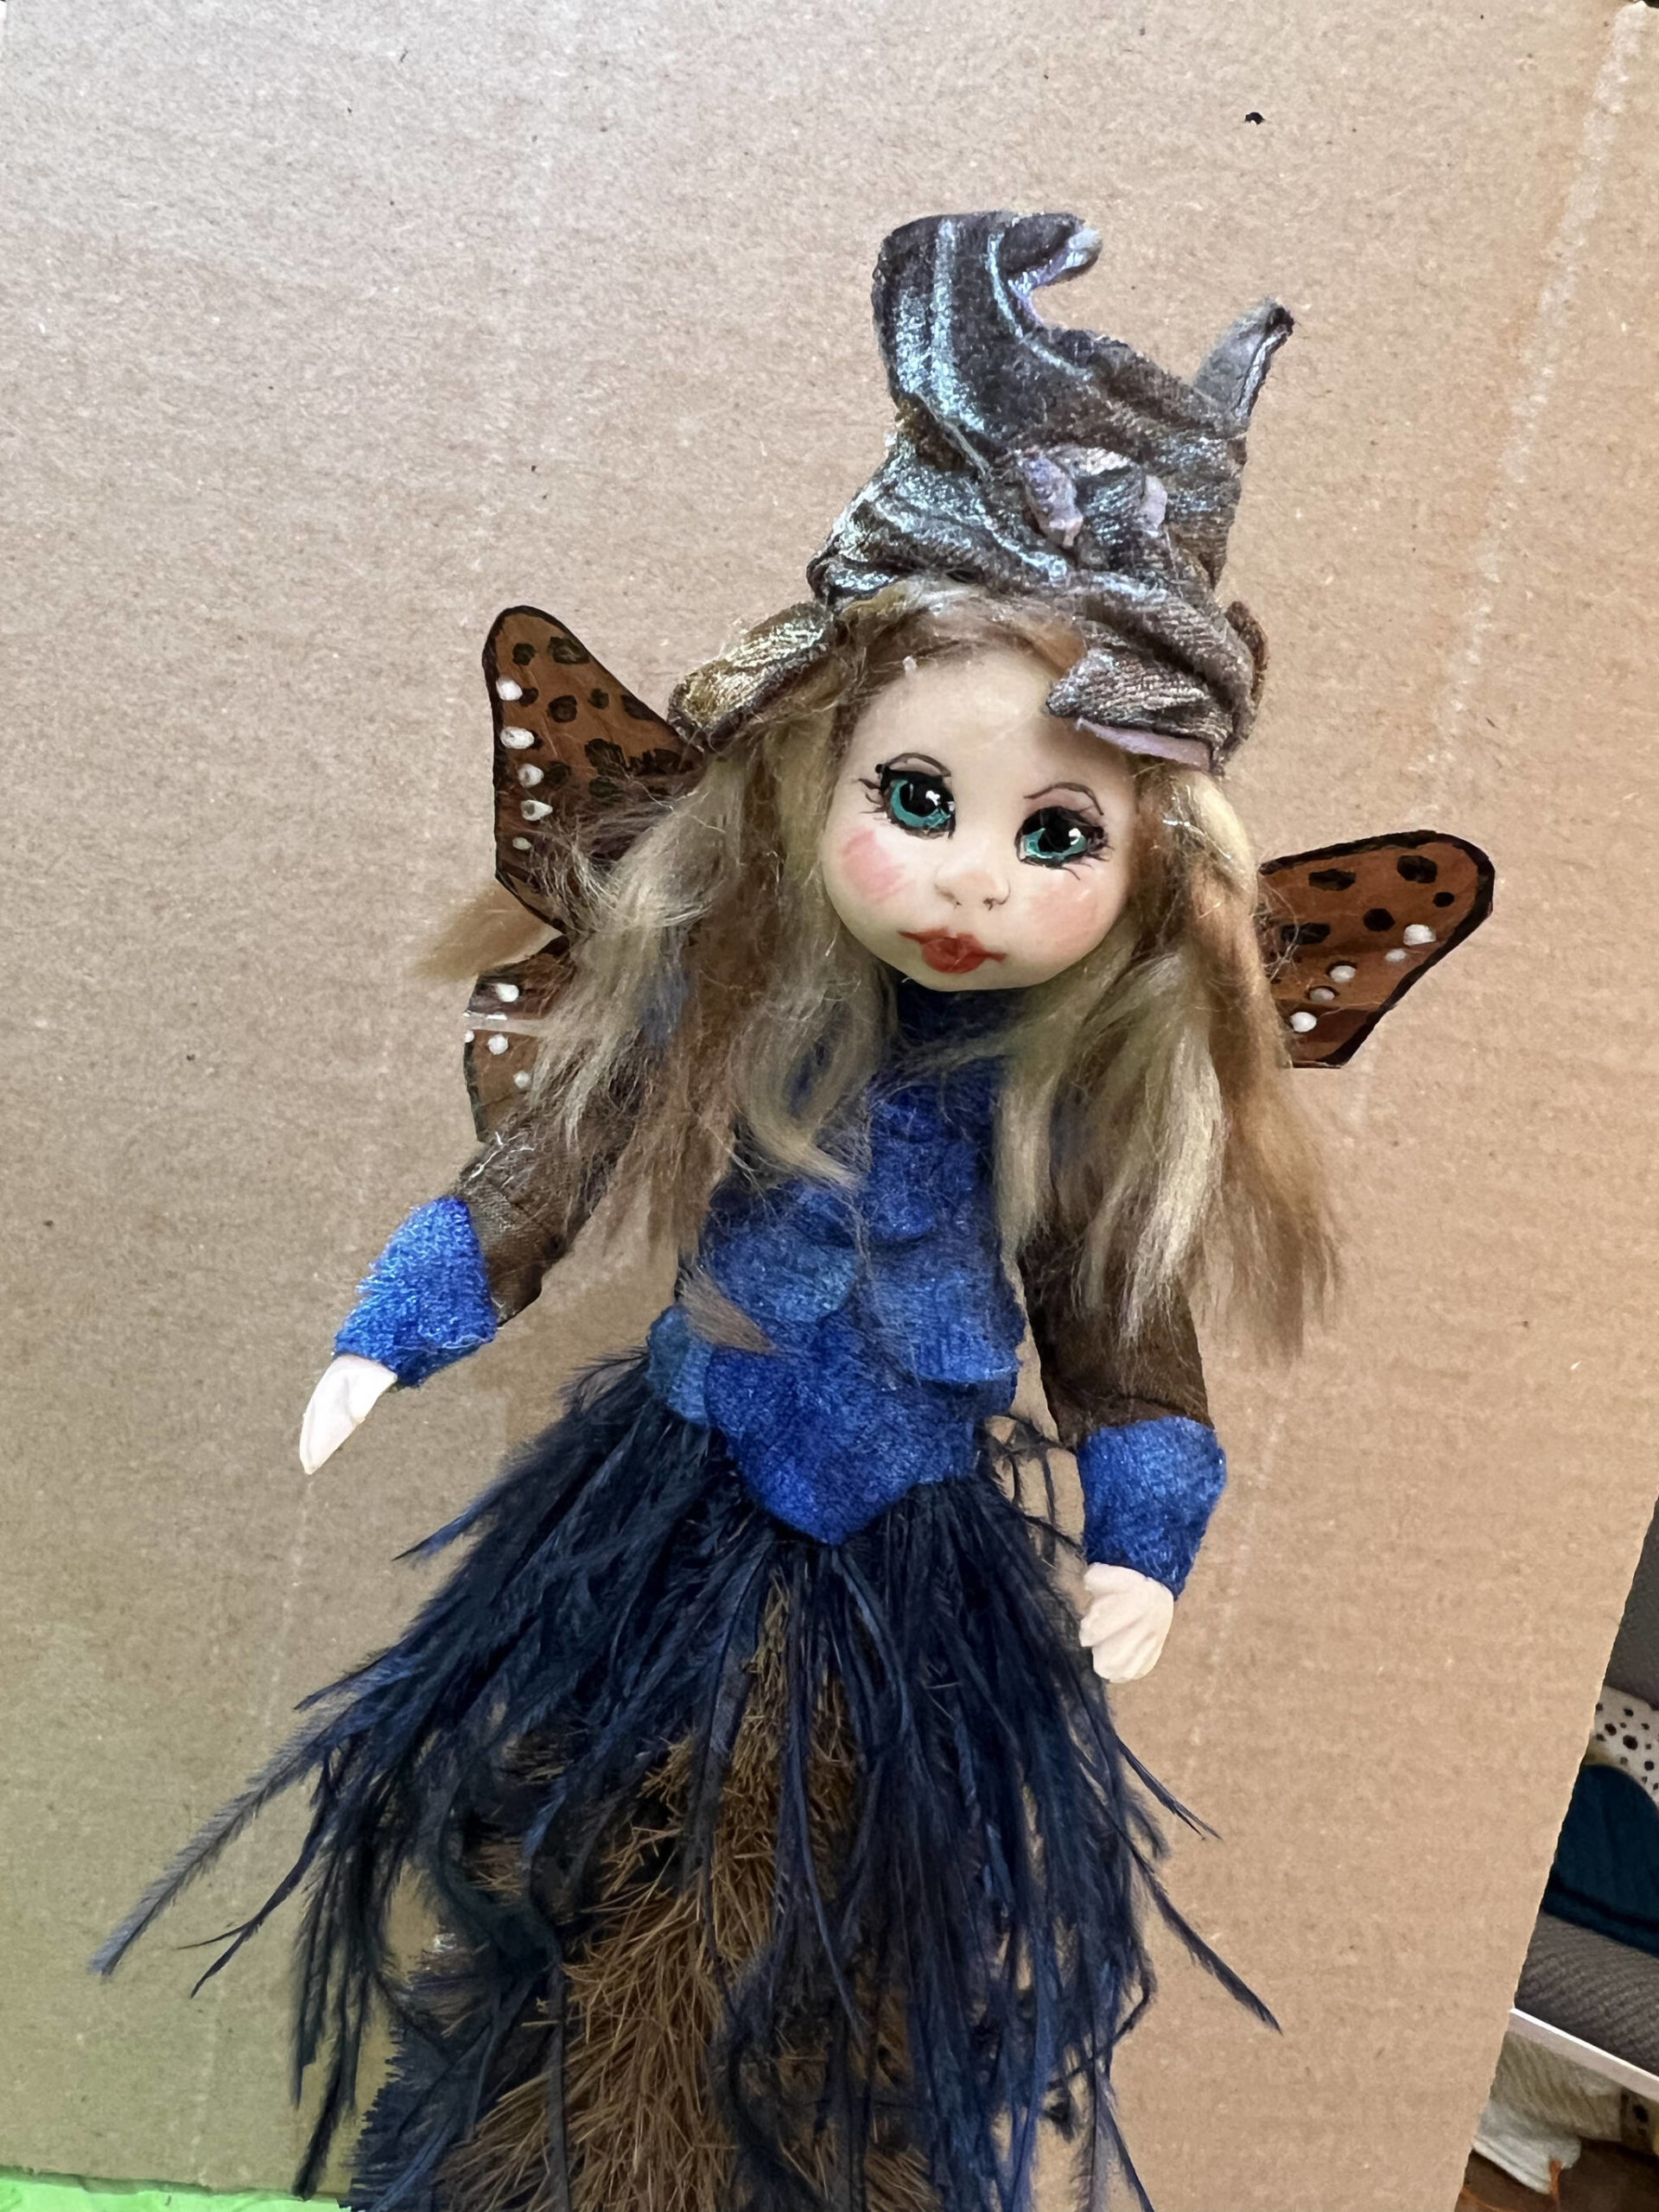 A mermaid doll made with mixed media by Danna Watson at the Masonic Center.